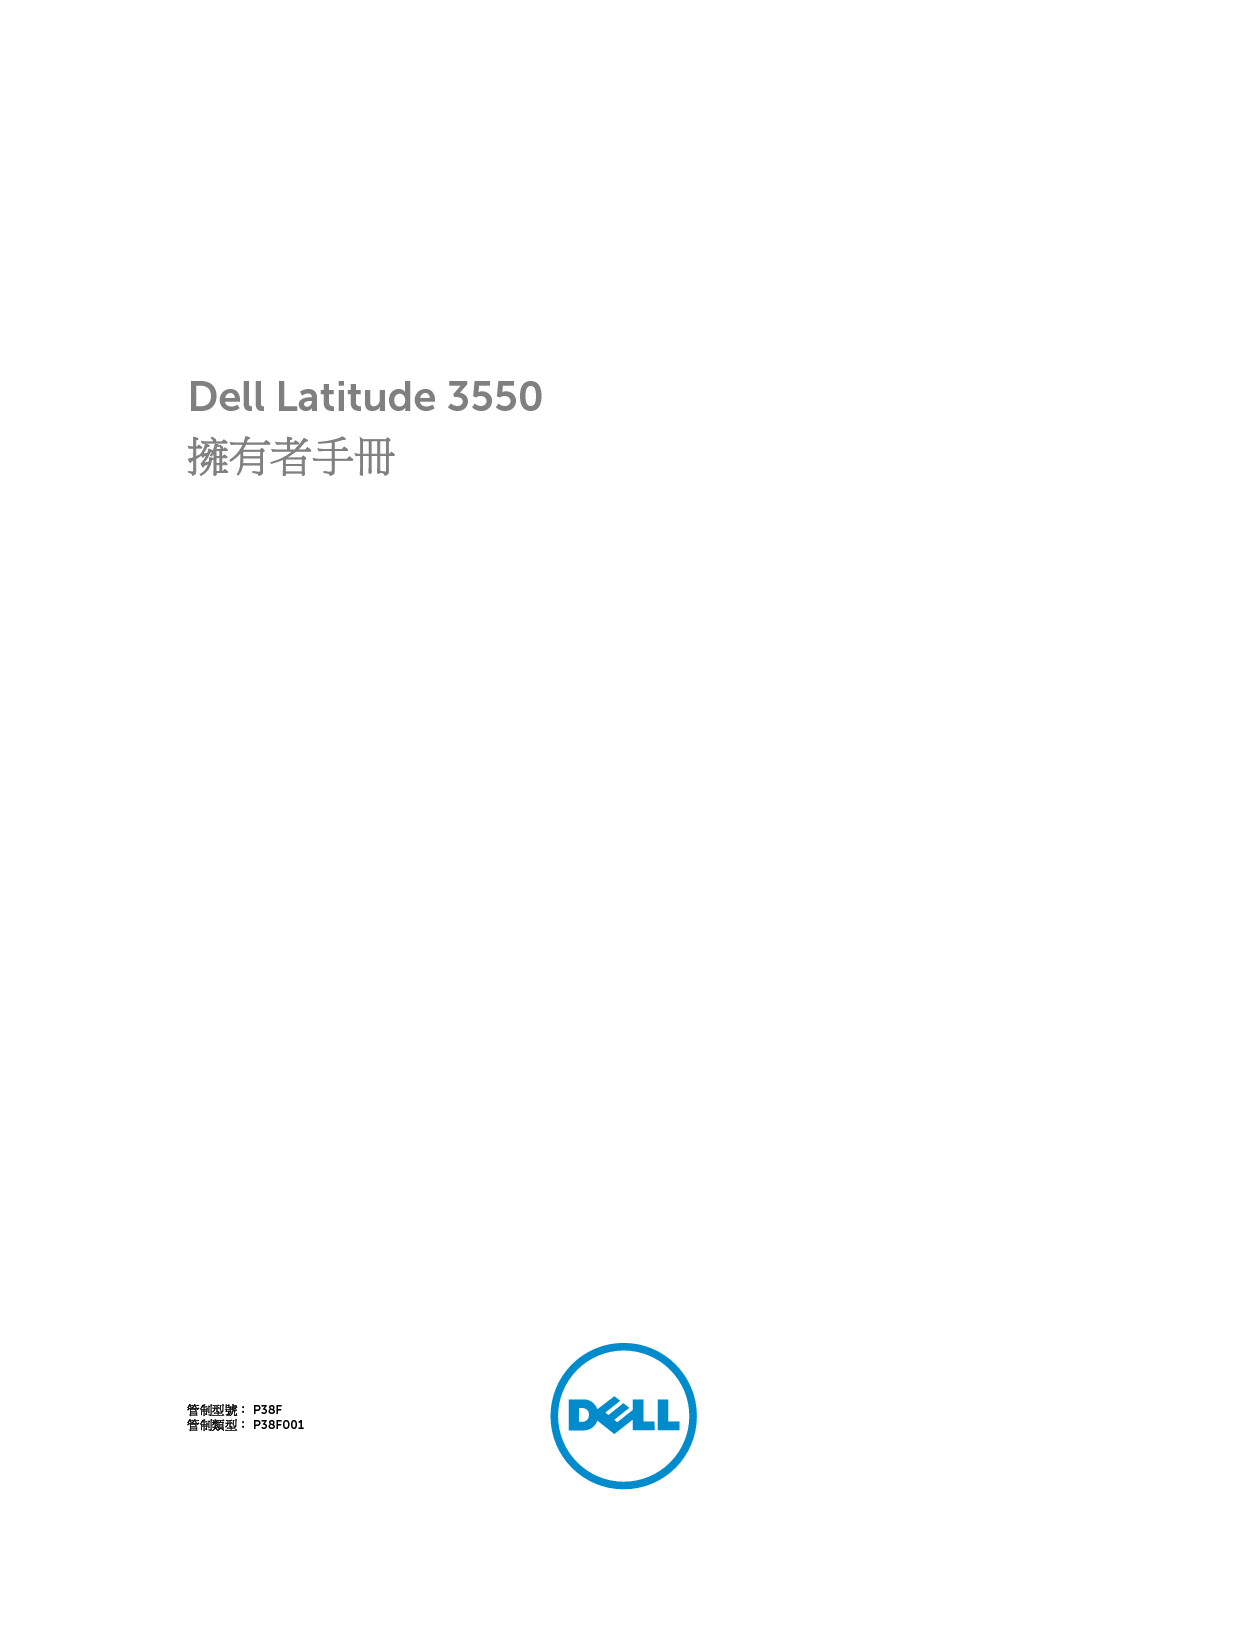 戴尔 Dell Latitude 3550 繁体 用户手册 封面